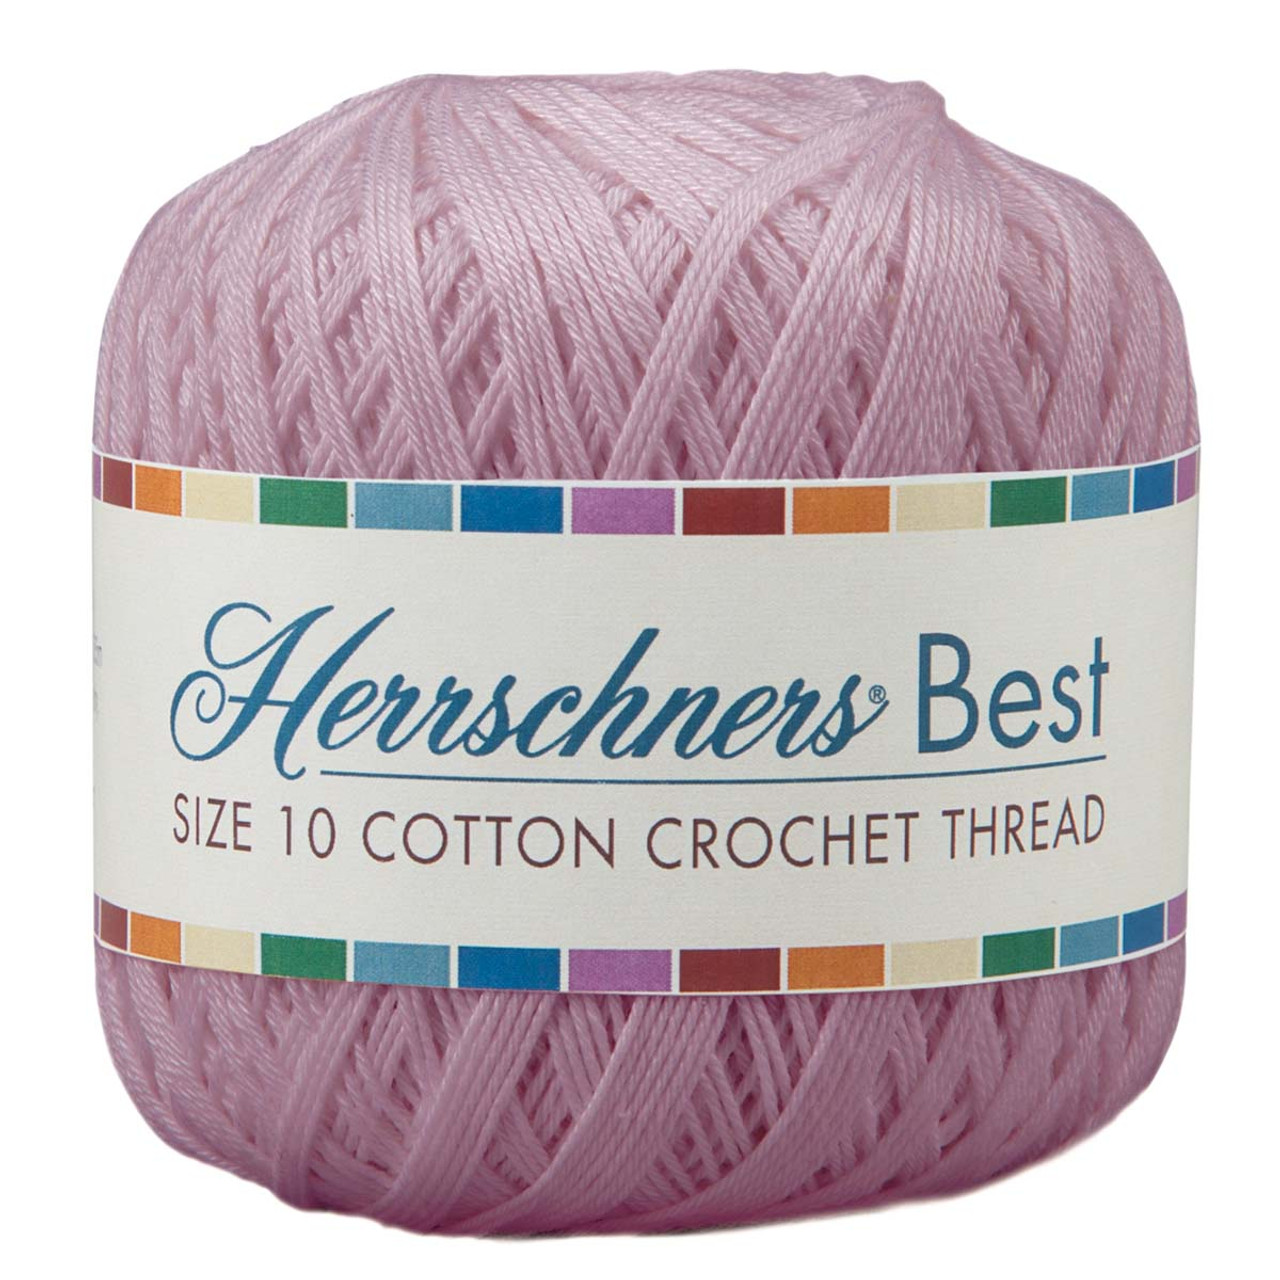 Herrschners Best Crochet Cotton Crochet Thread